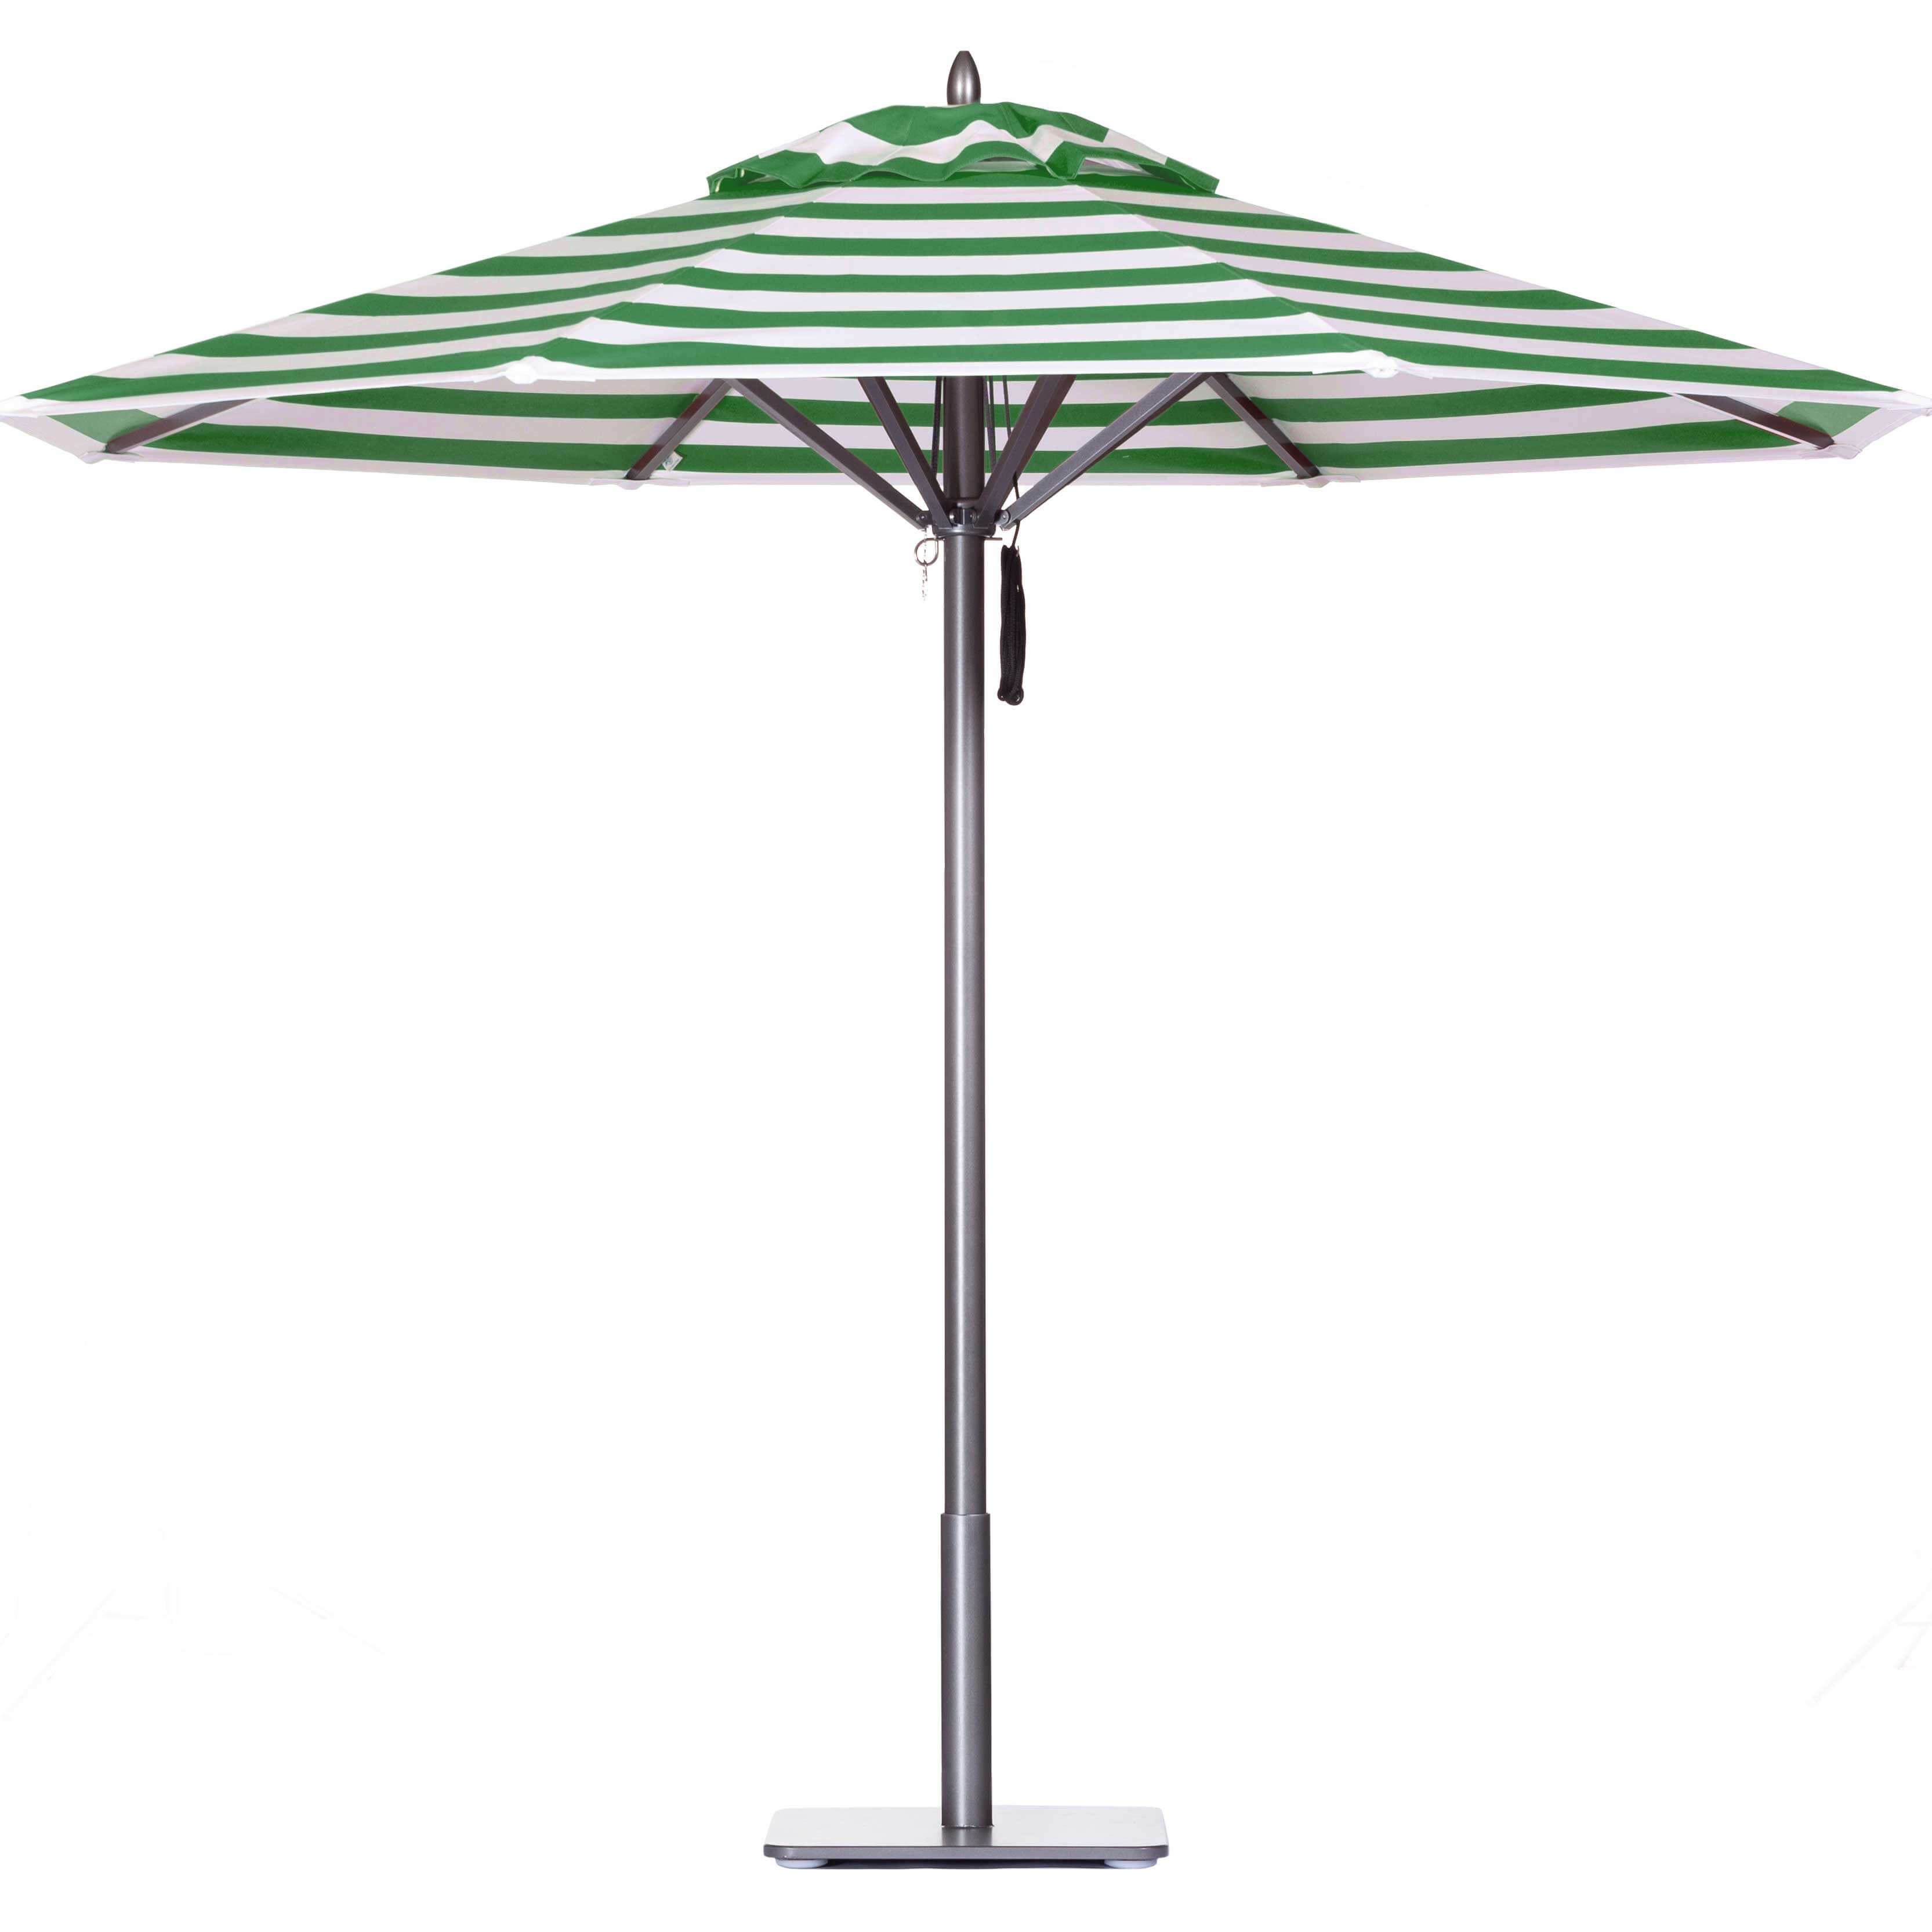 Cabana Green Stripe Umbrella Image